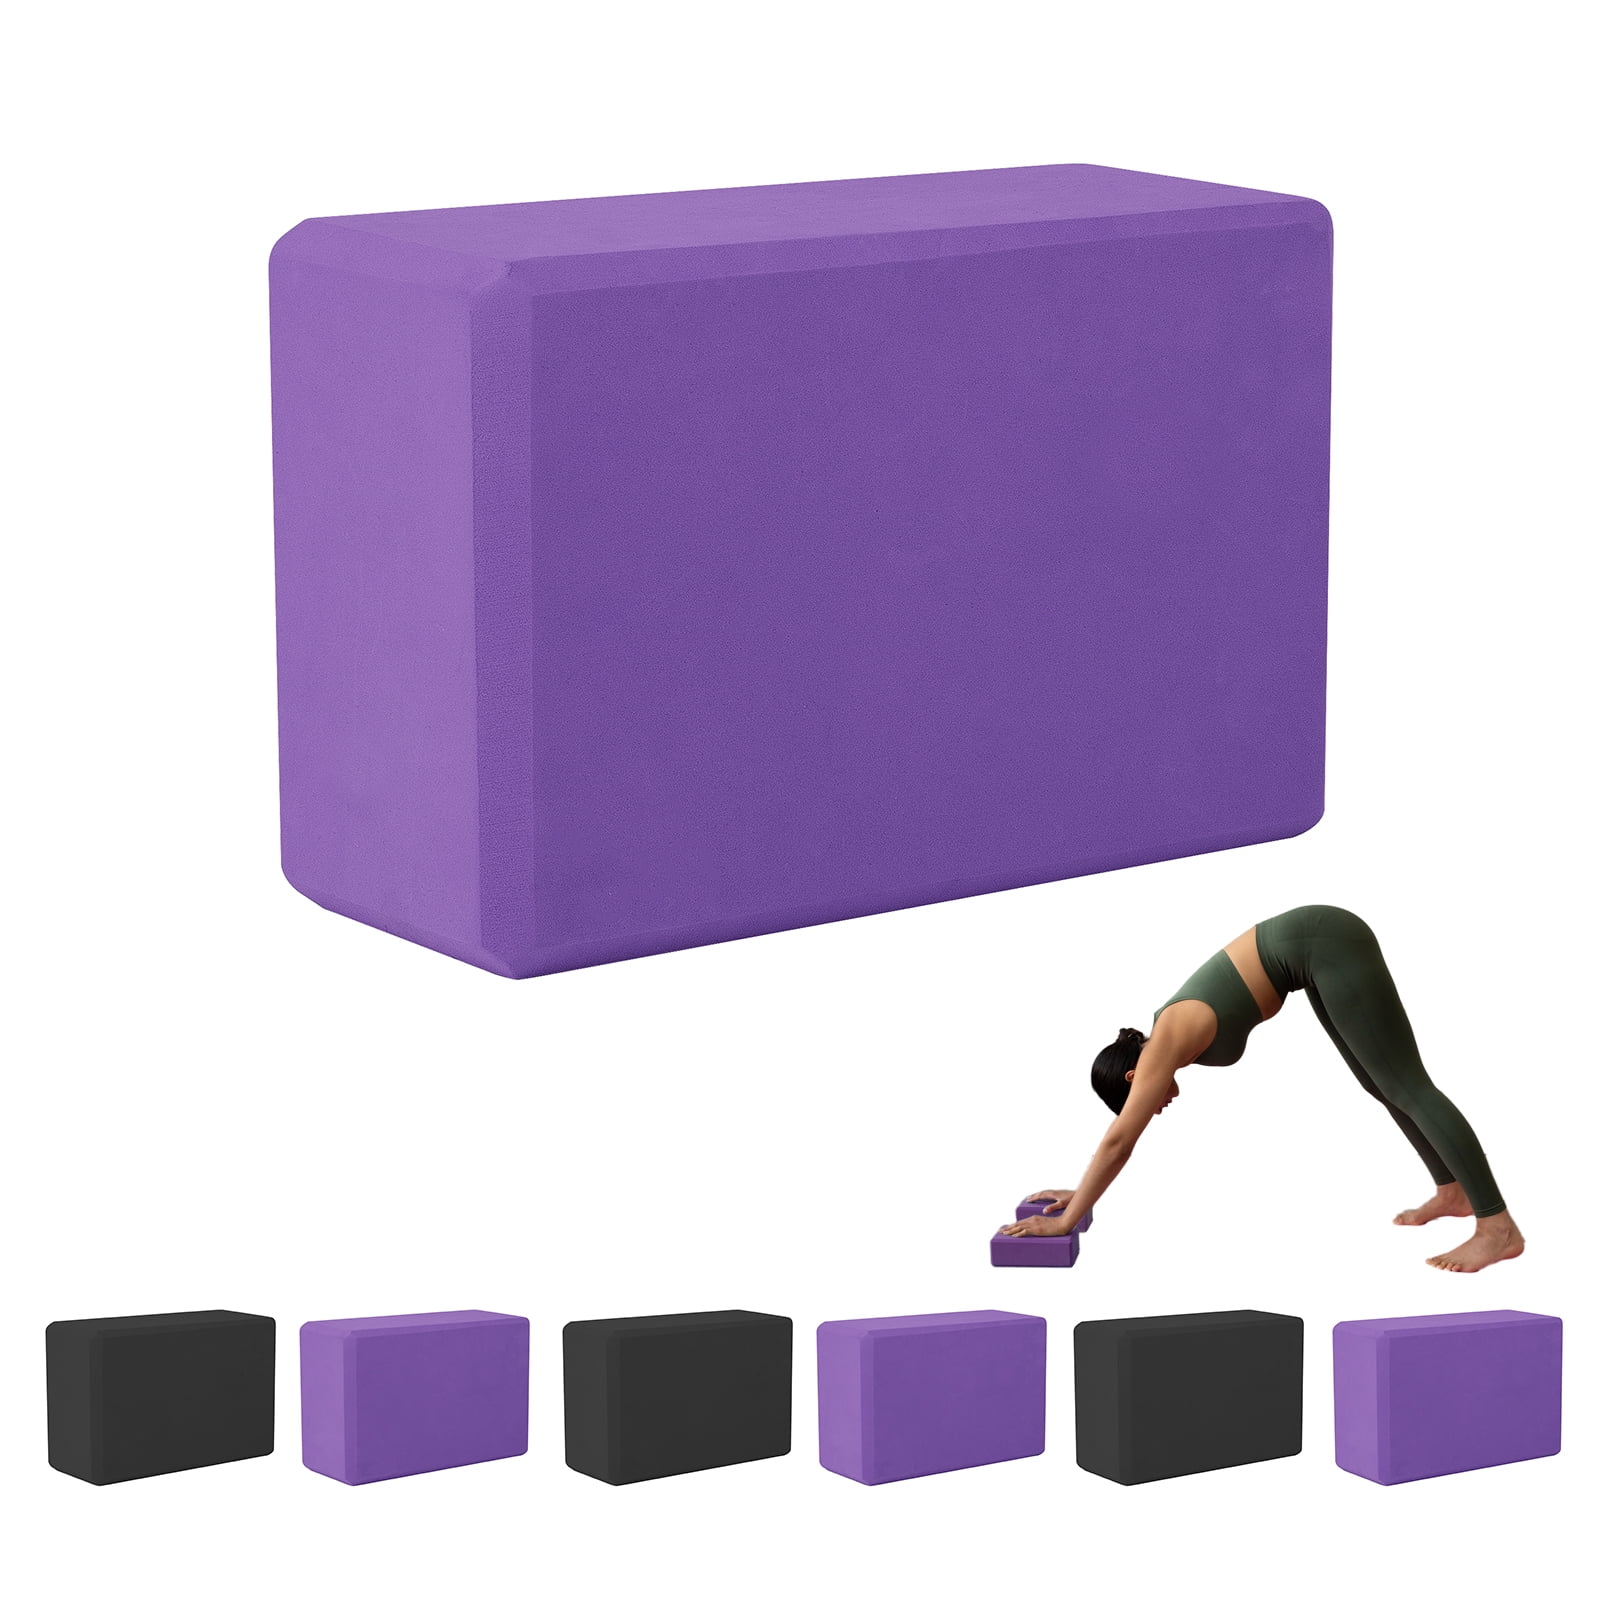 Vuori Yoga Block, Salt Foam Yoga Block